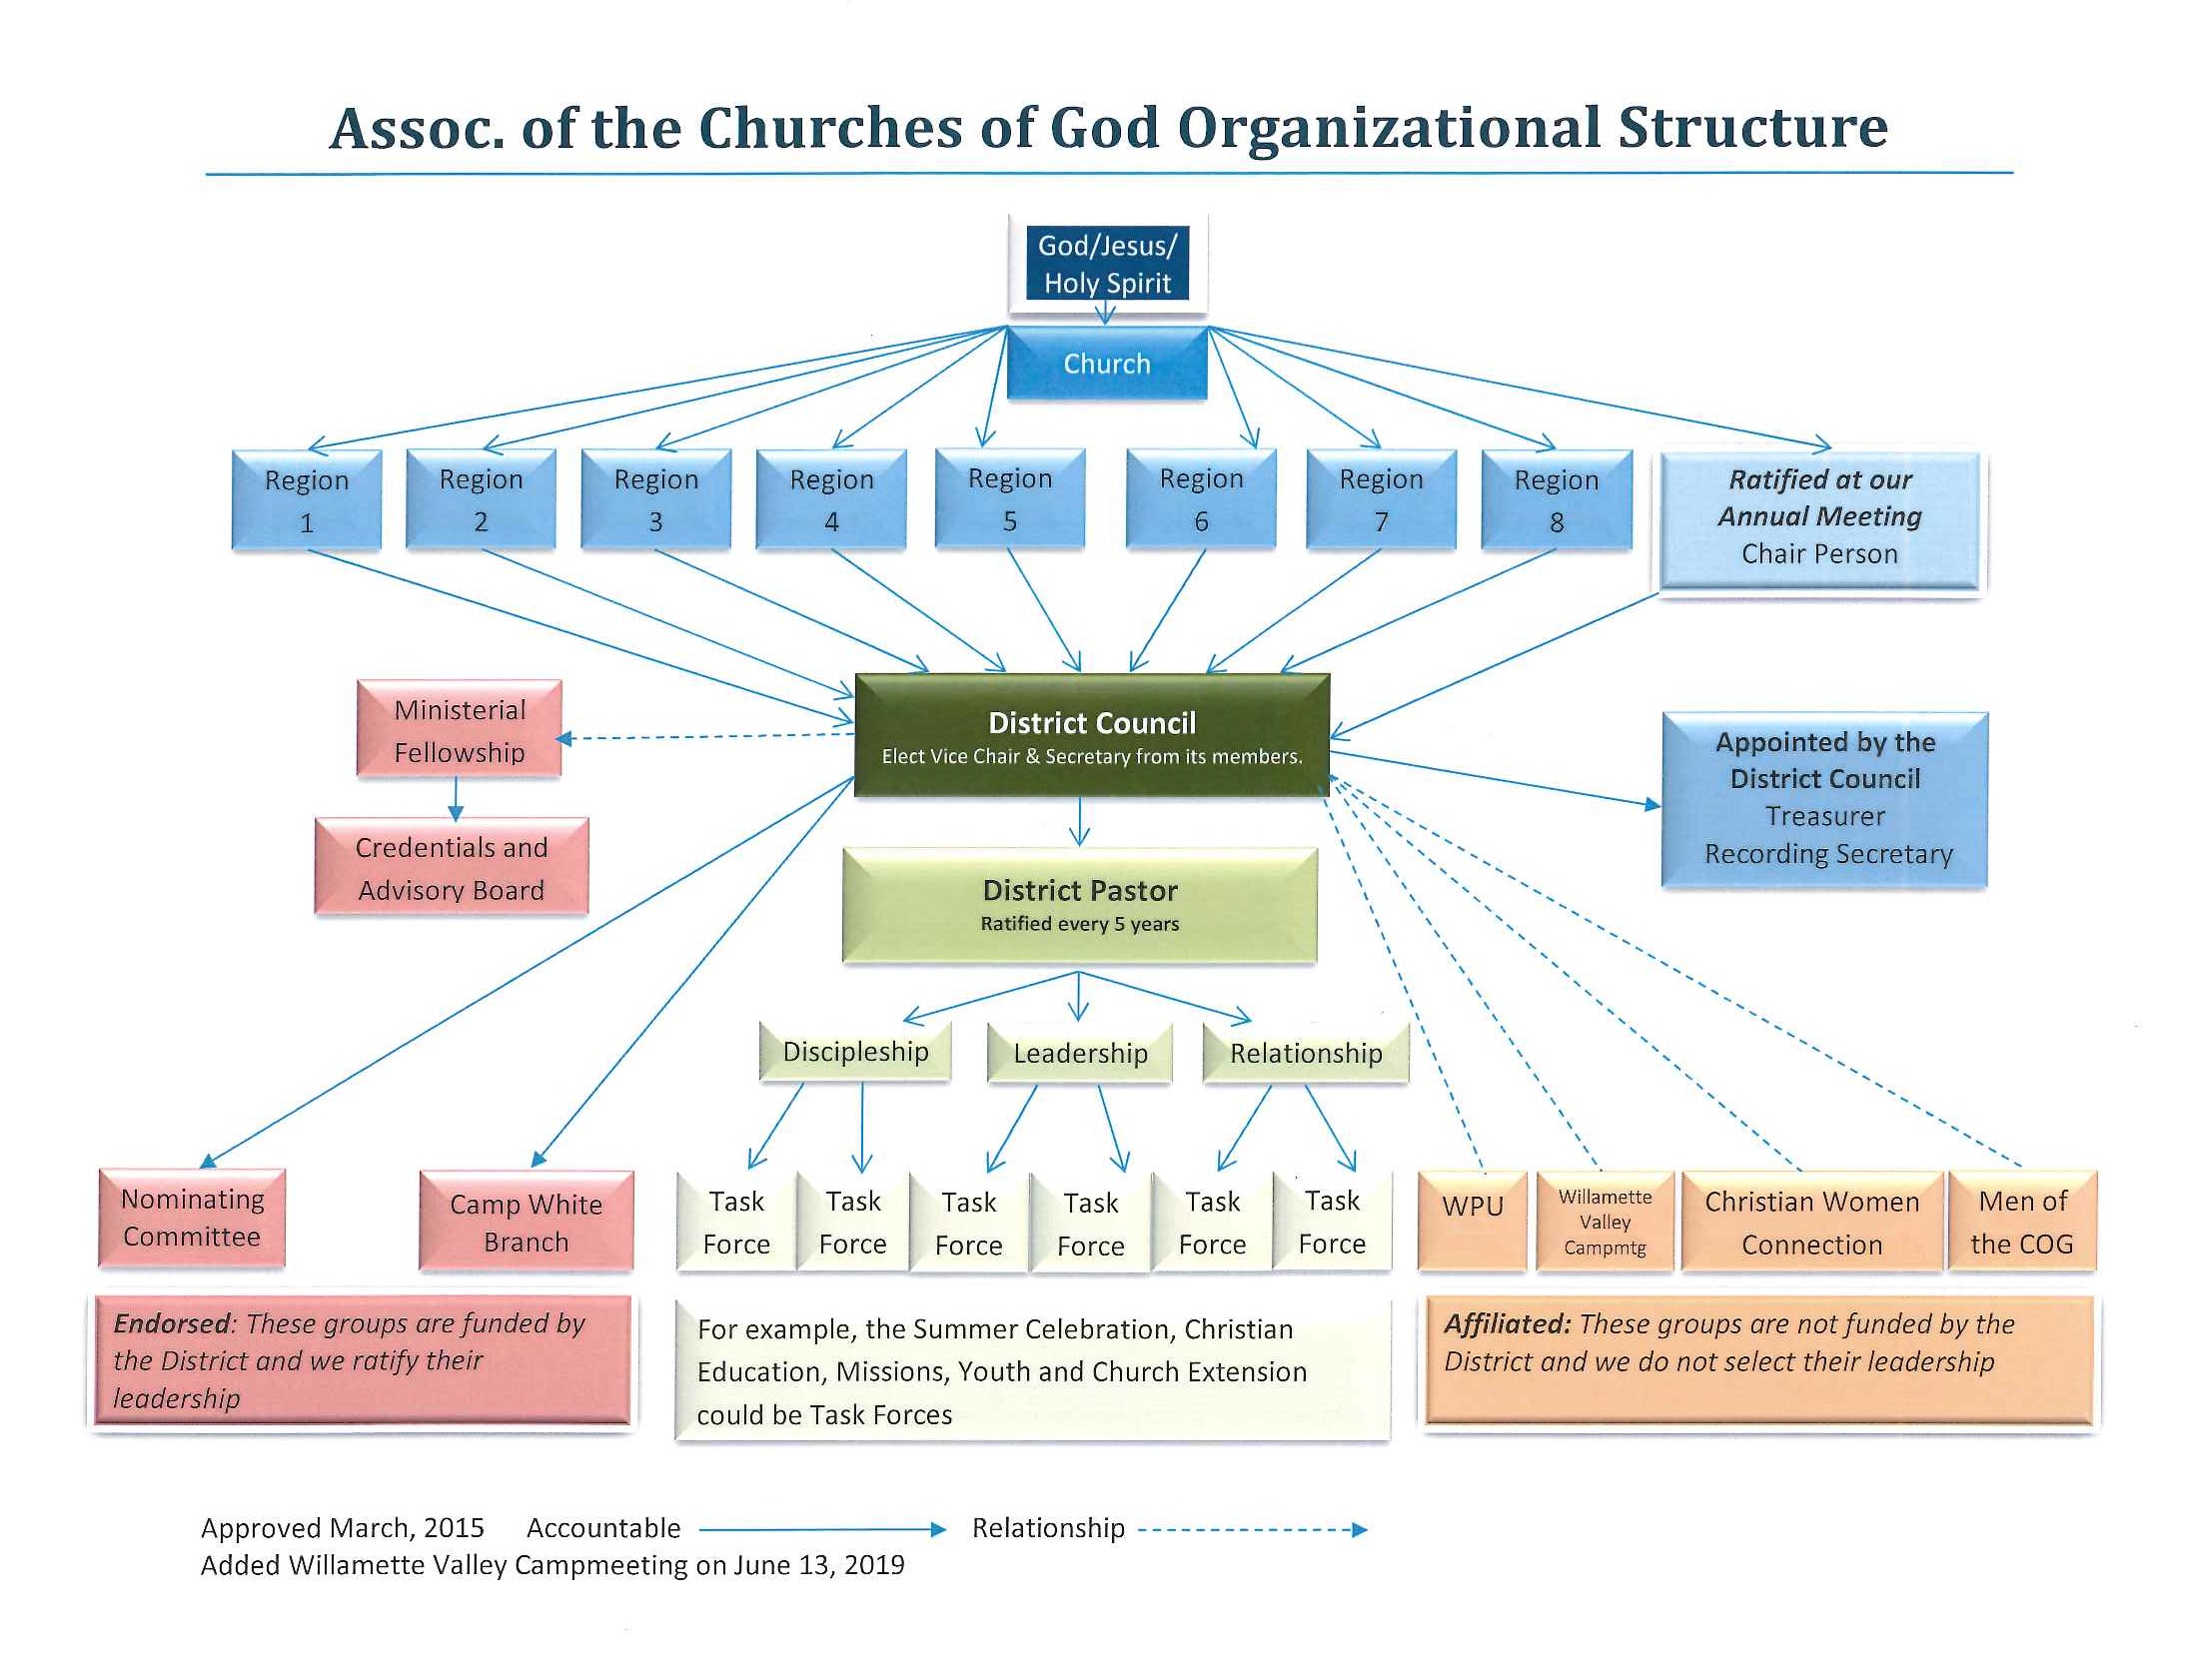 Church Government Chart